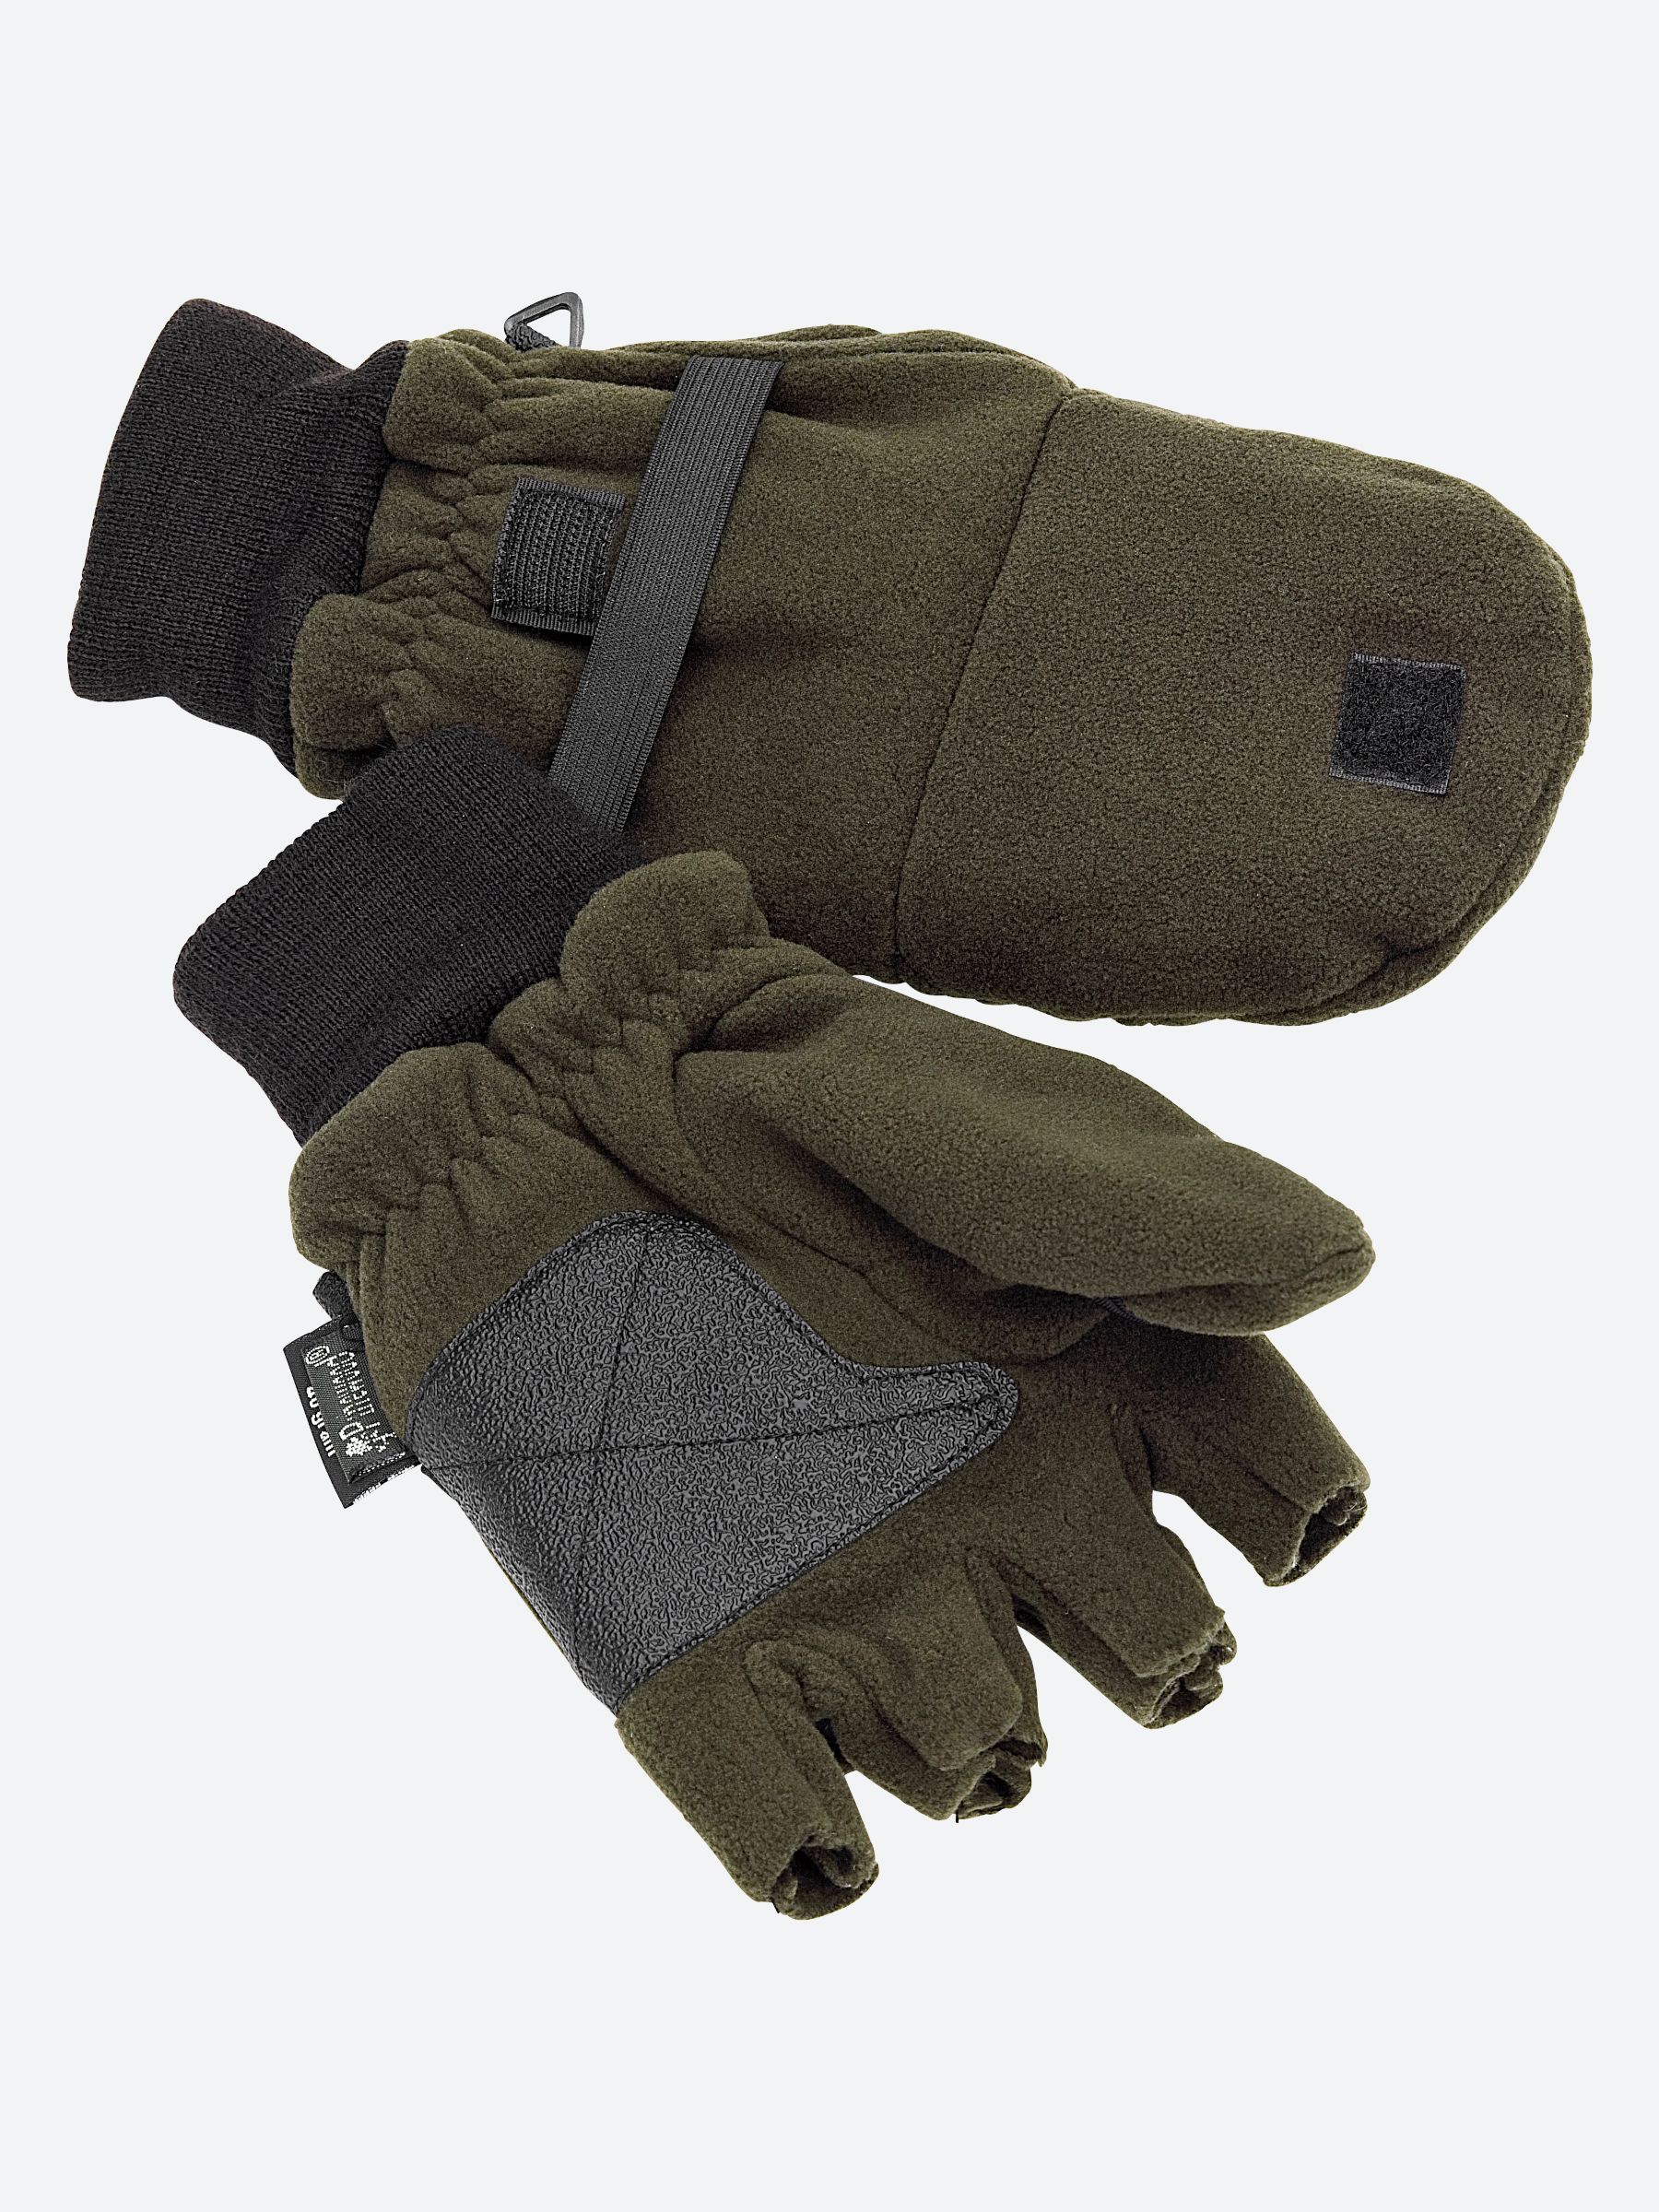 ✅ перчатки для зимней рыбалки - https://xn----7sbeepoxlghbuicp1mg.xn--p1ai/